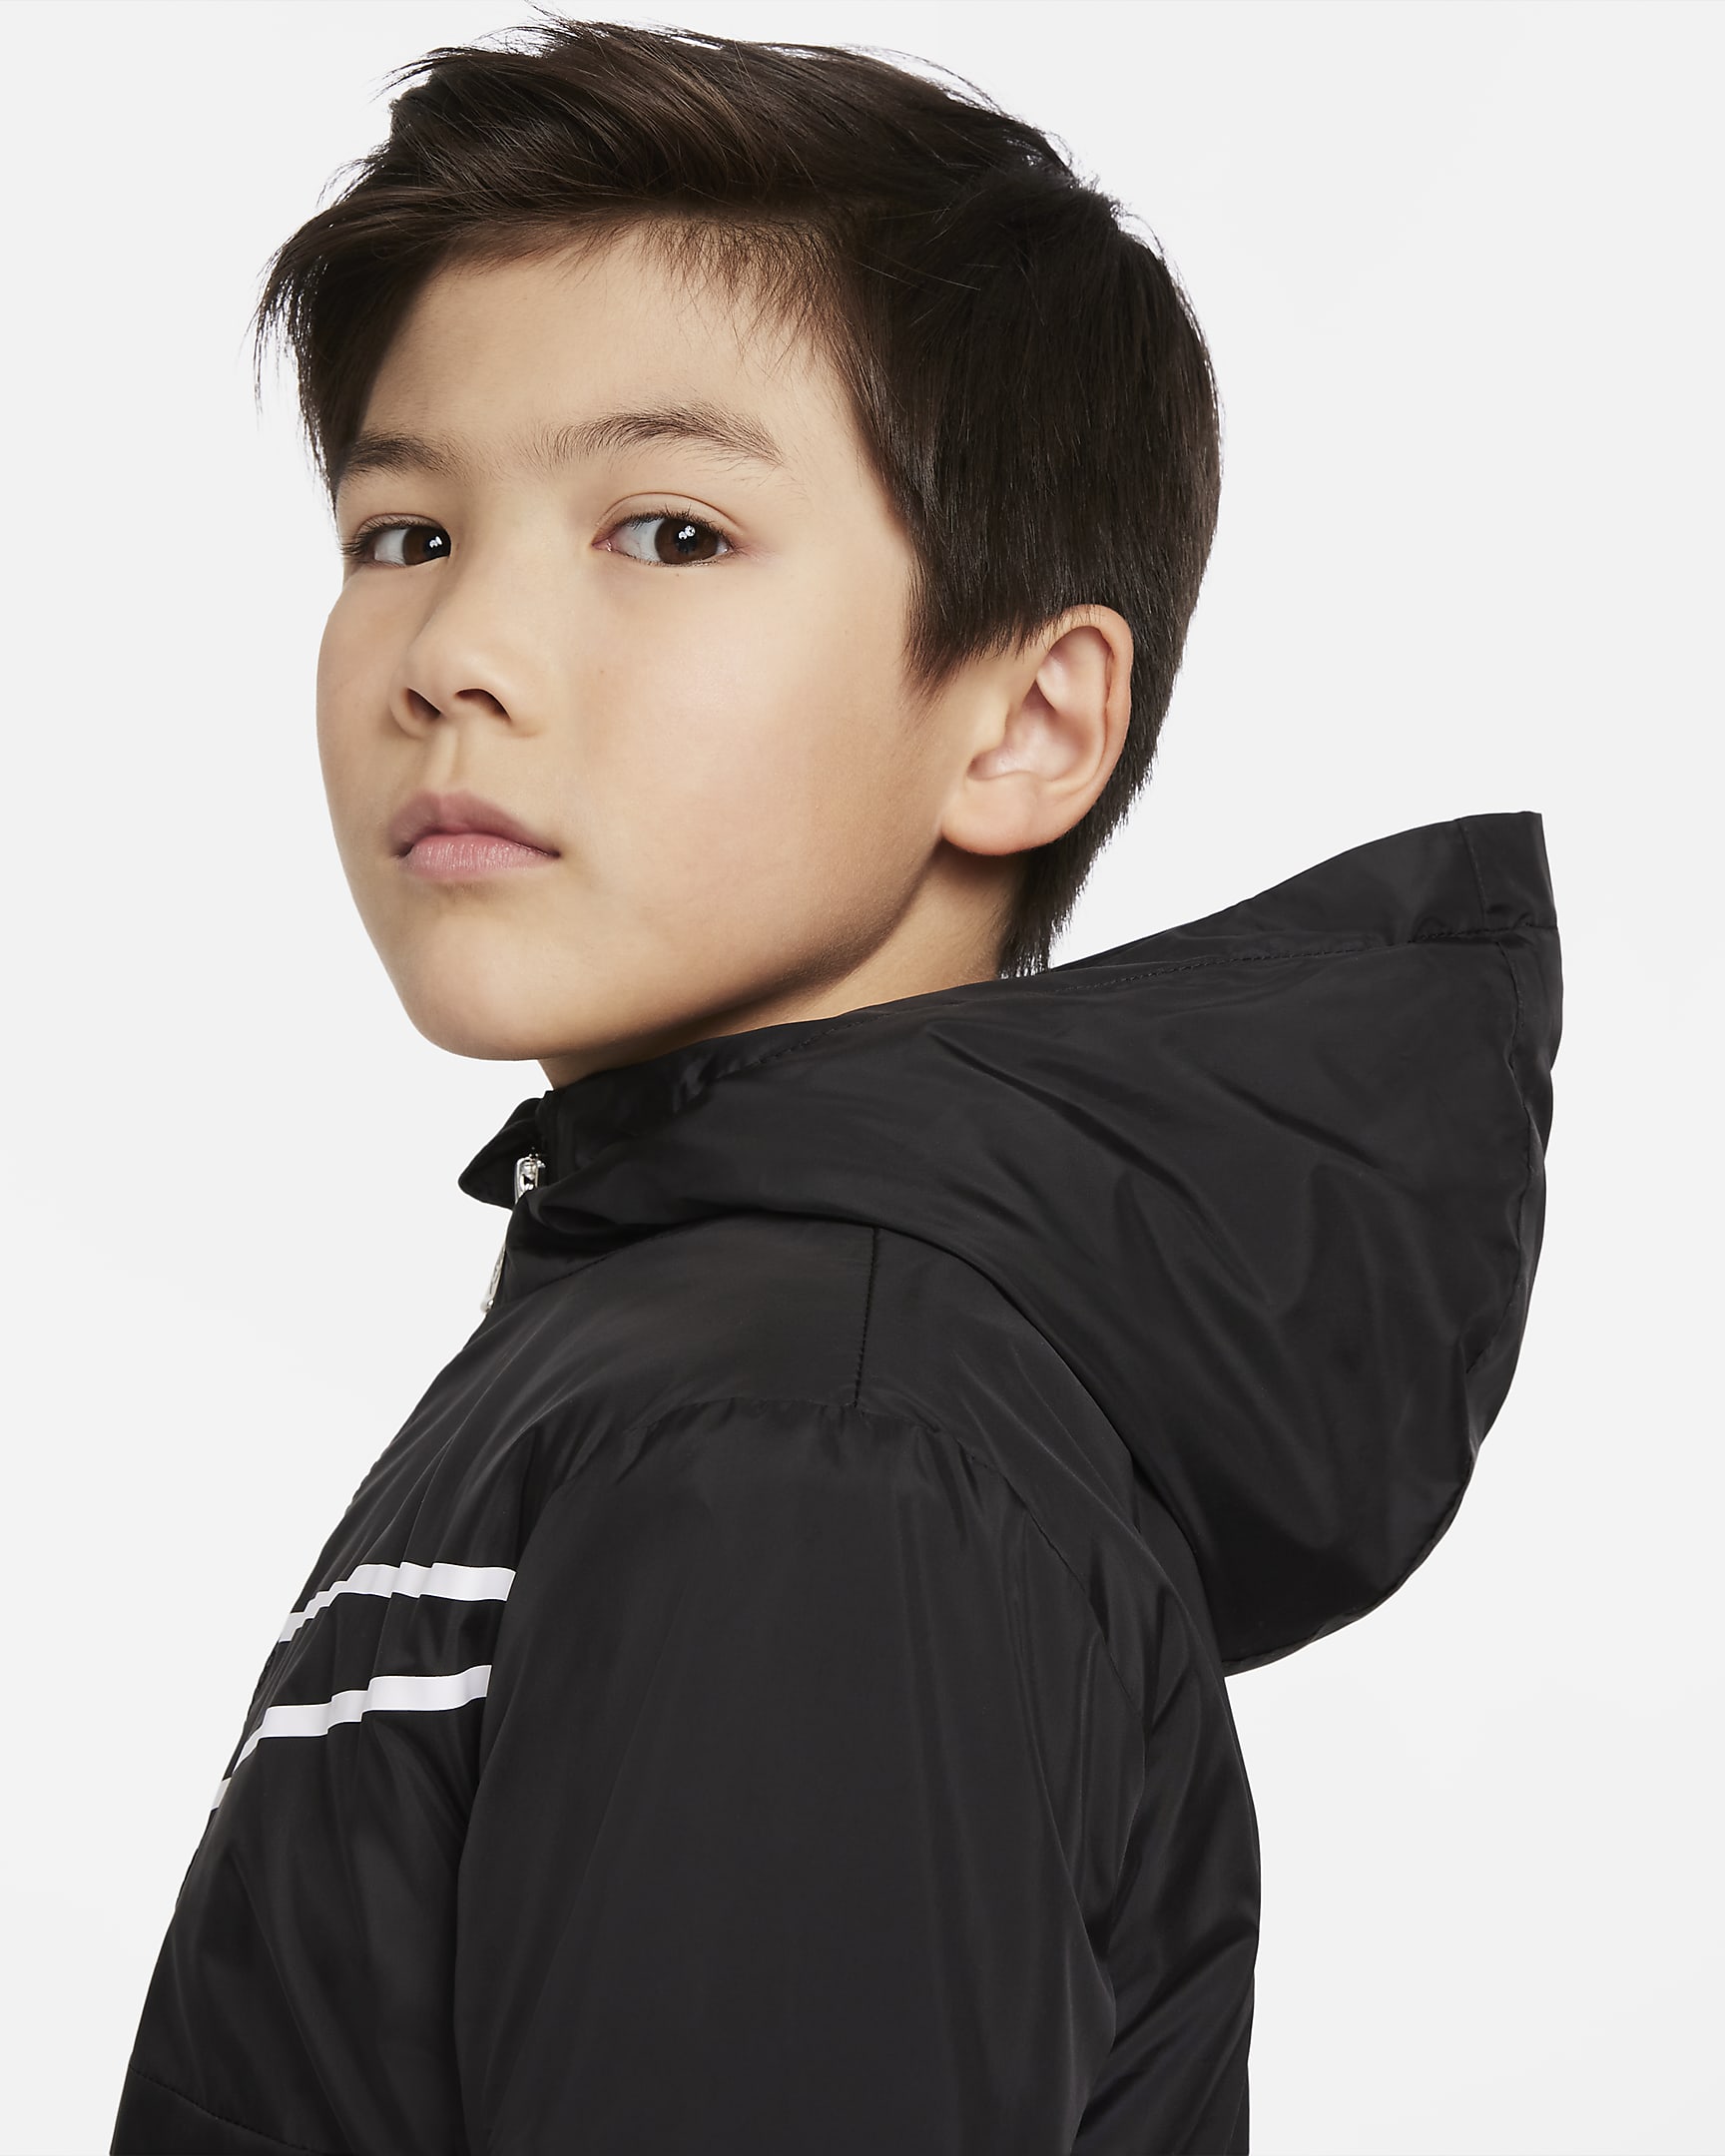 Nike Little Kids' Full-Zip Jacket. Nike.com